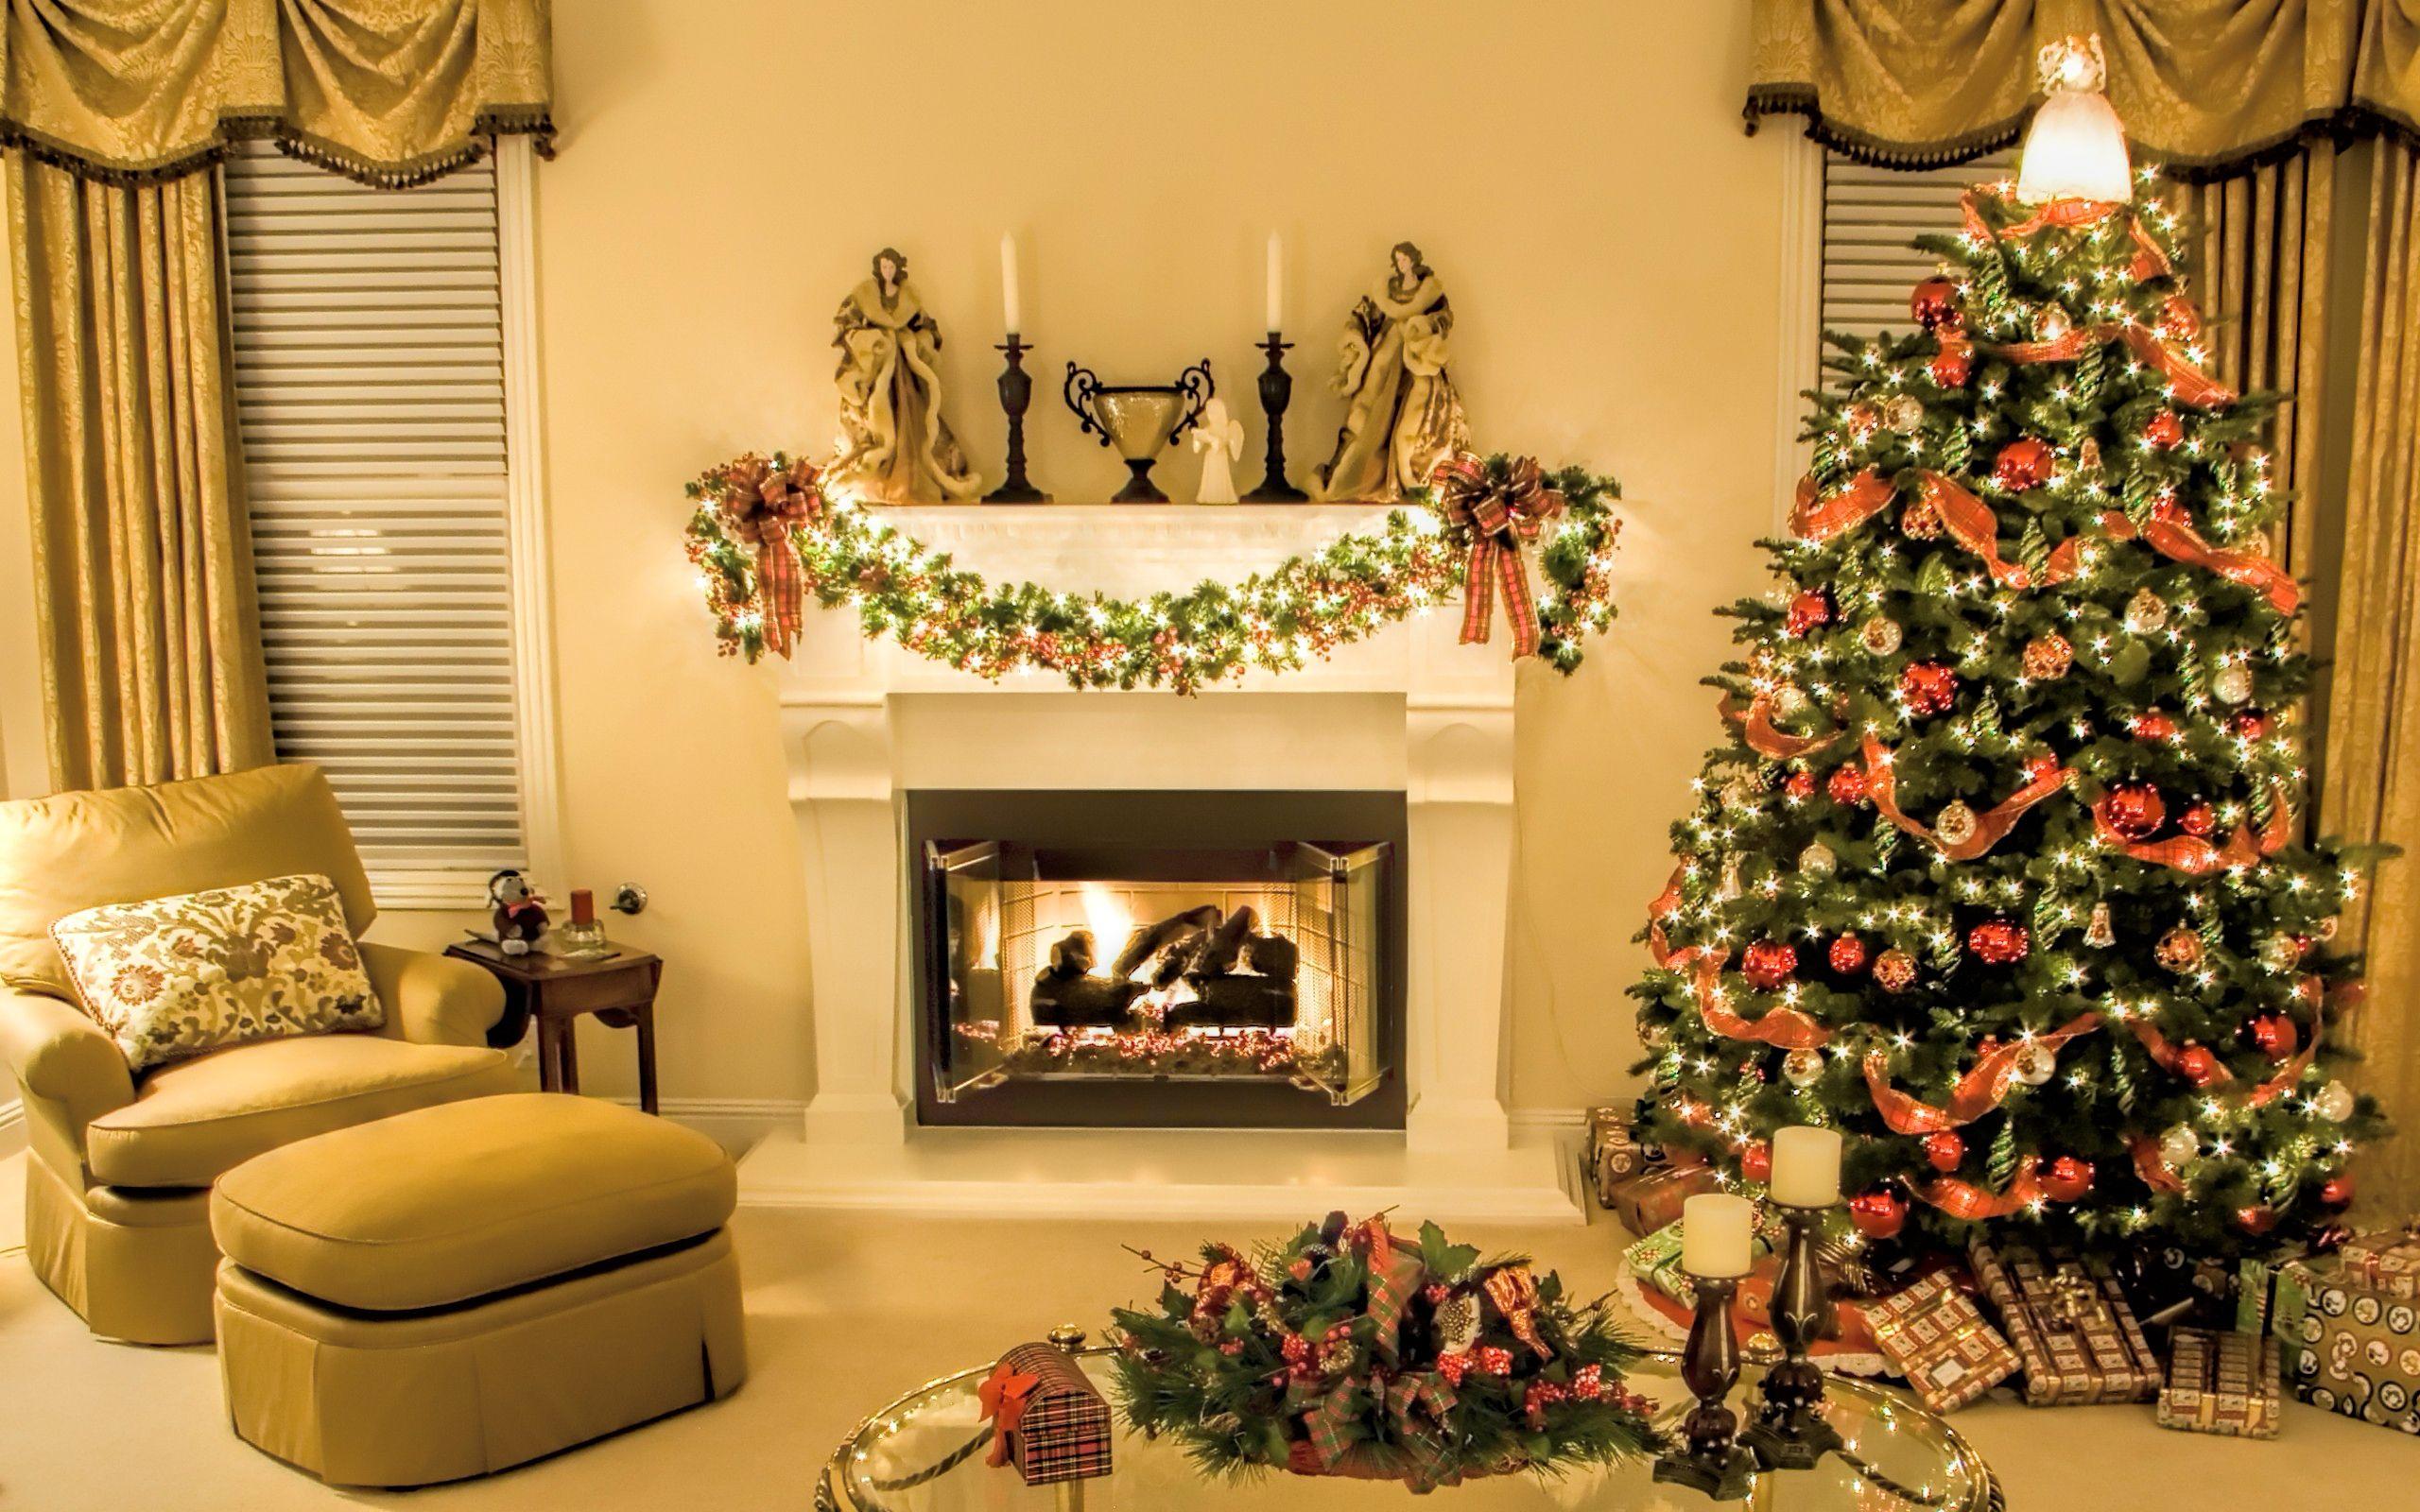 fireplace wallpaper for living room